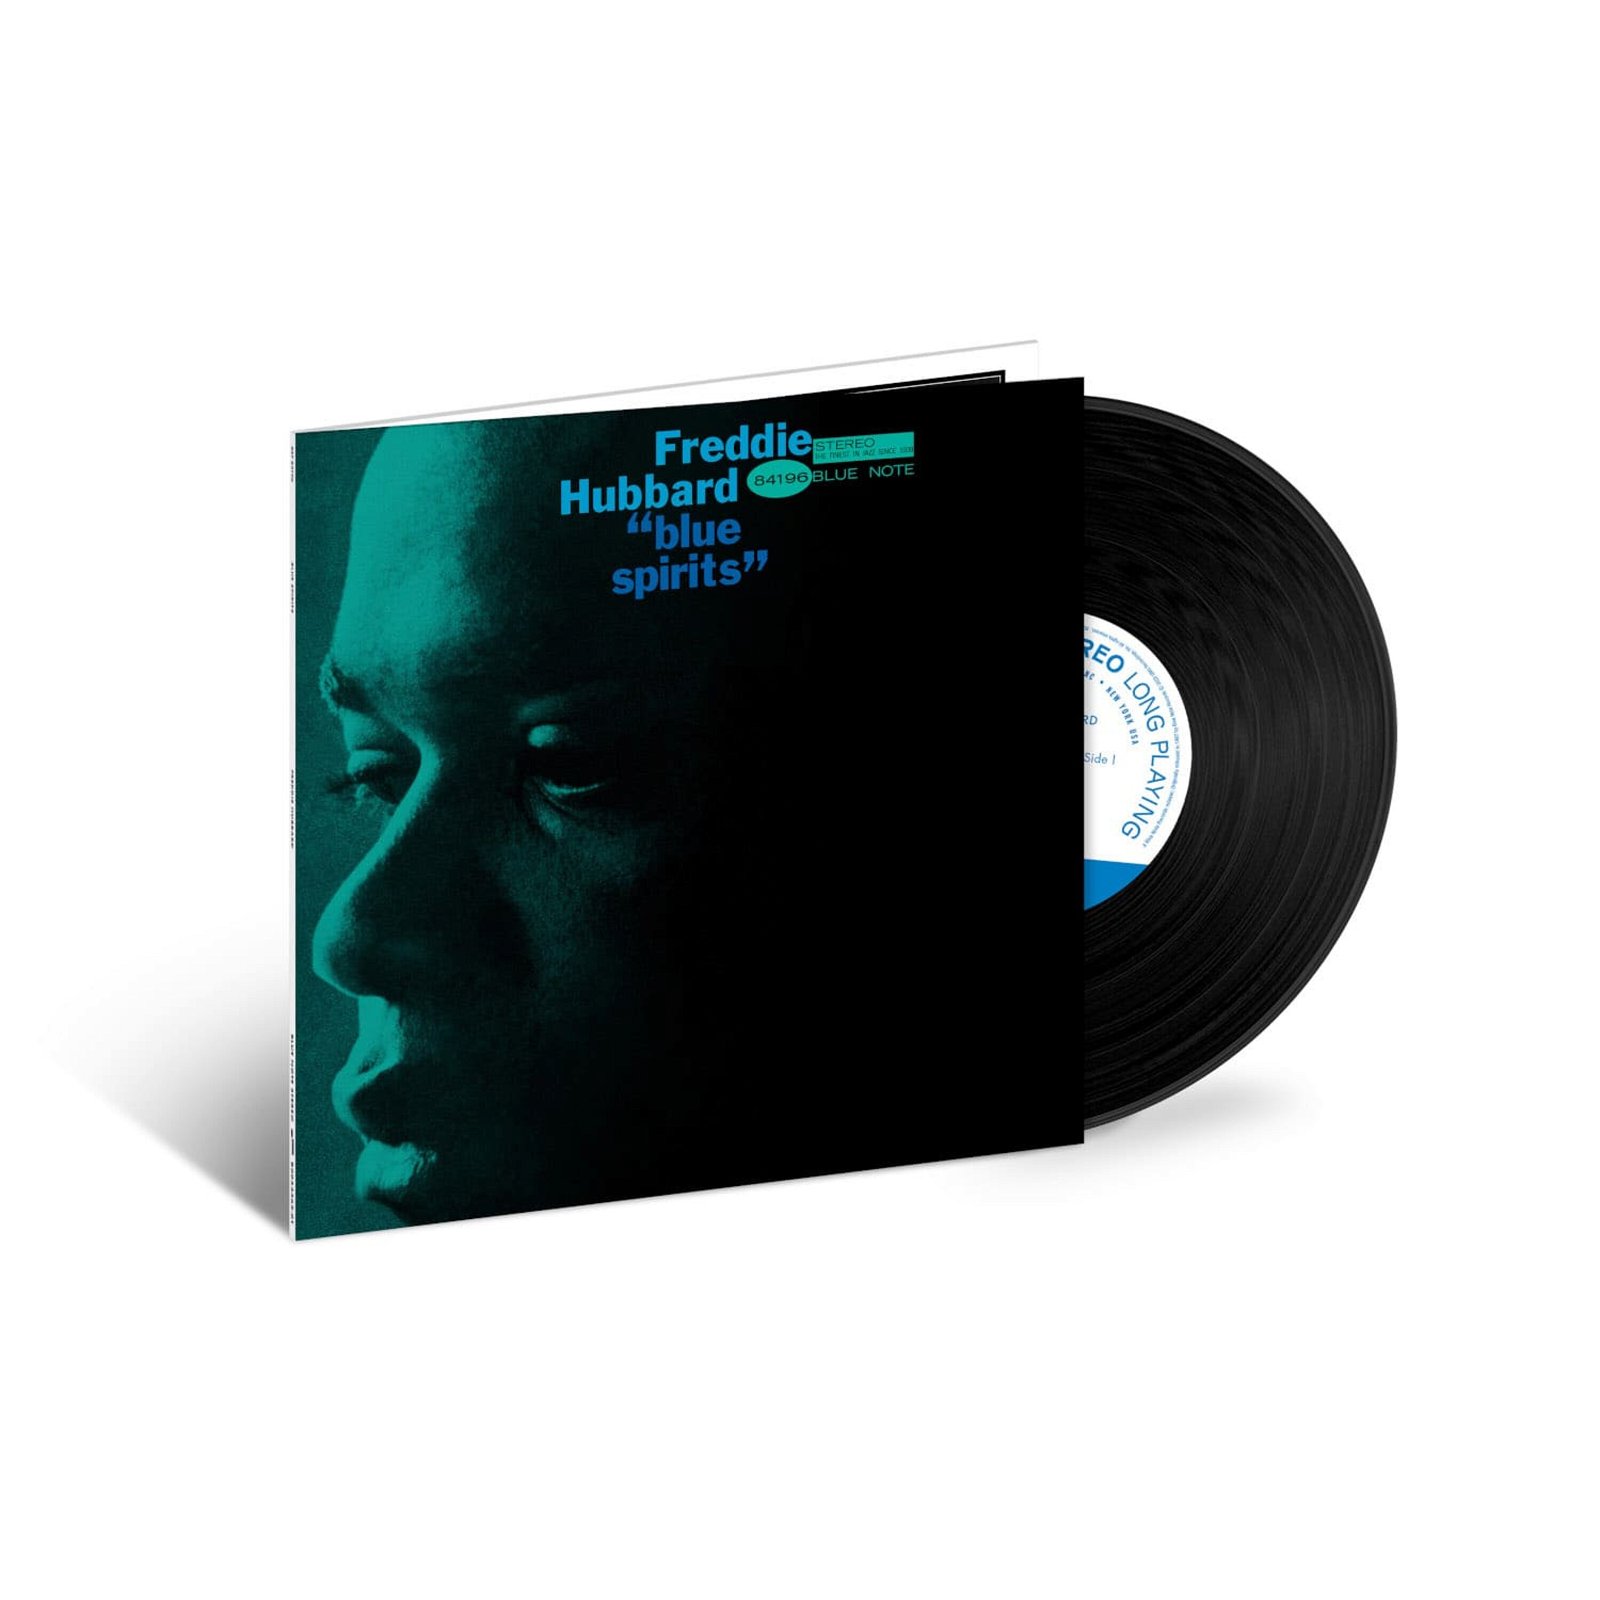 CD Shop - HUBBARD FREDDIE BLUE SPIRITS